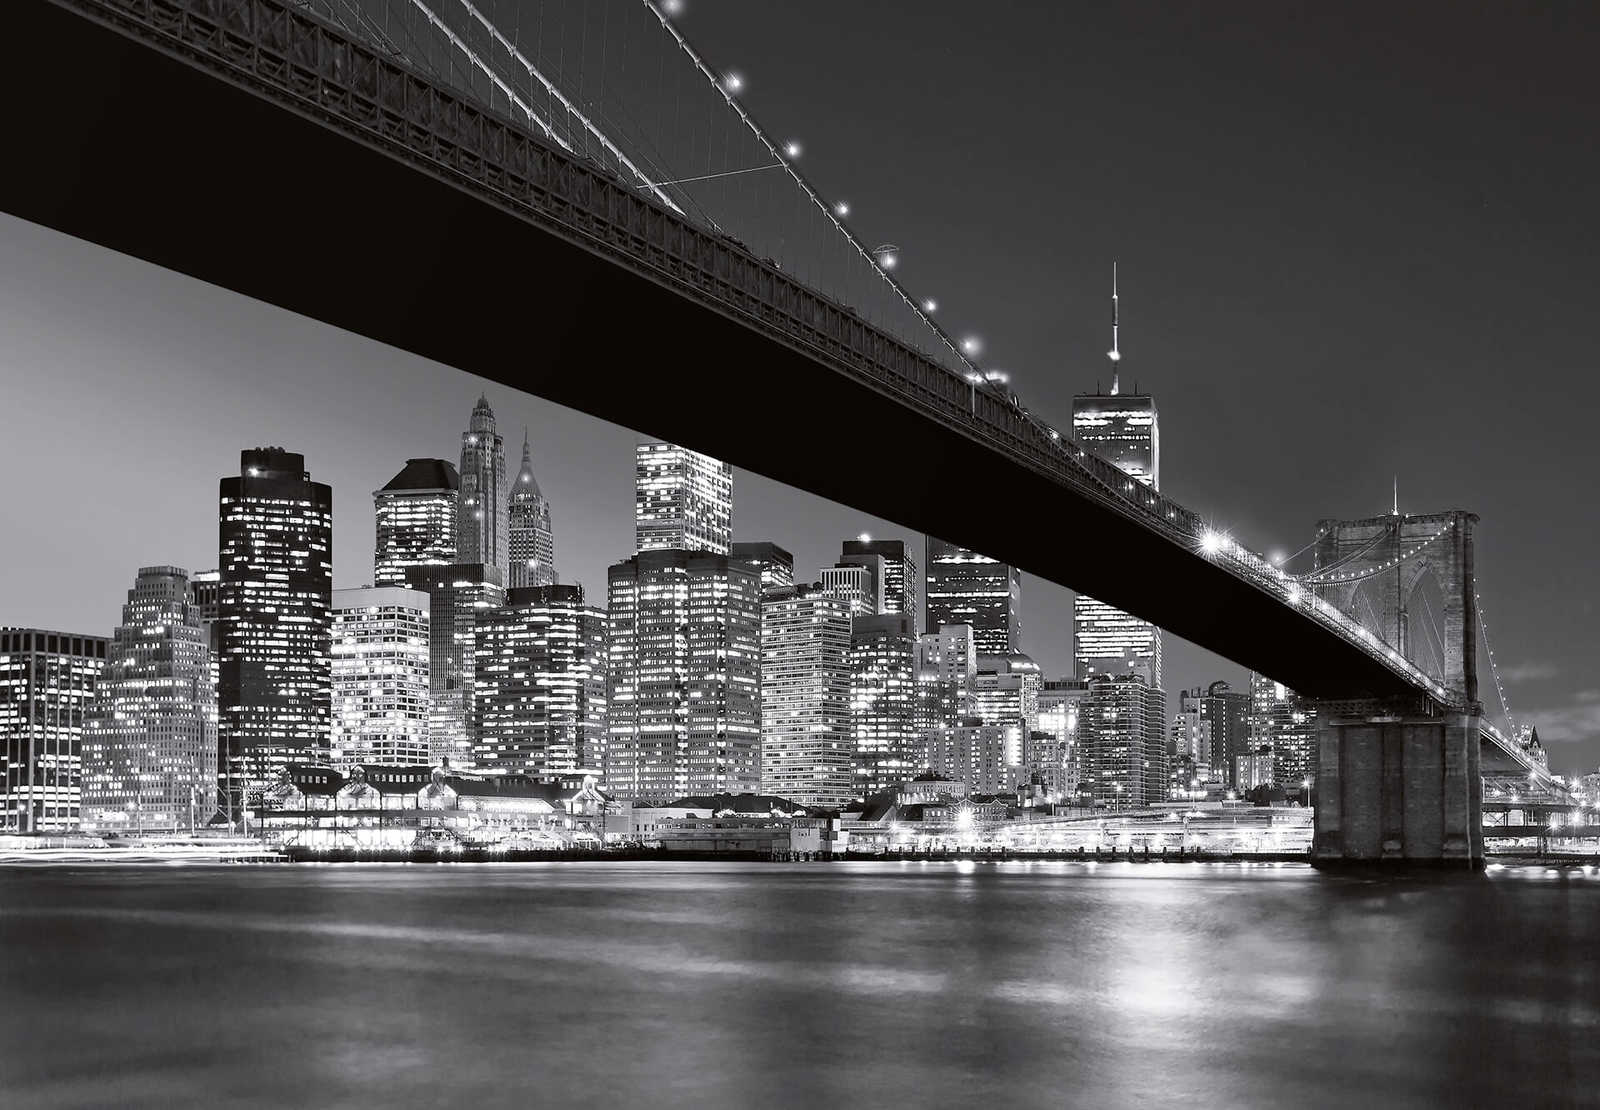         Brooklyn Bridge New York mural in black and white
    